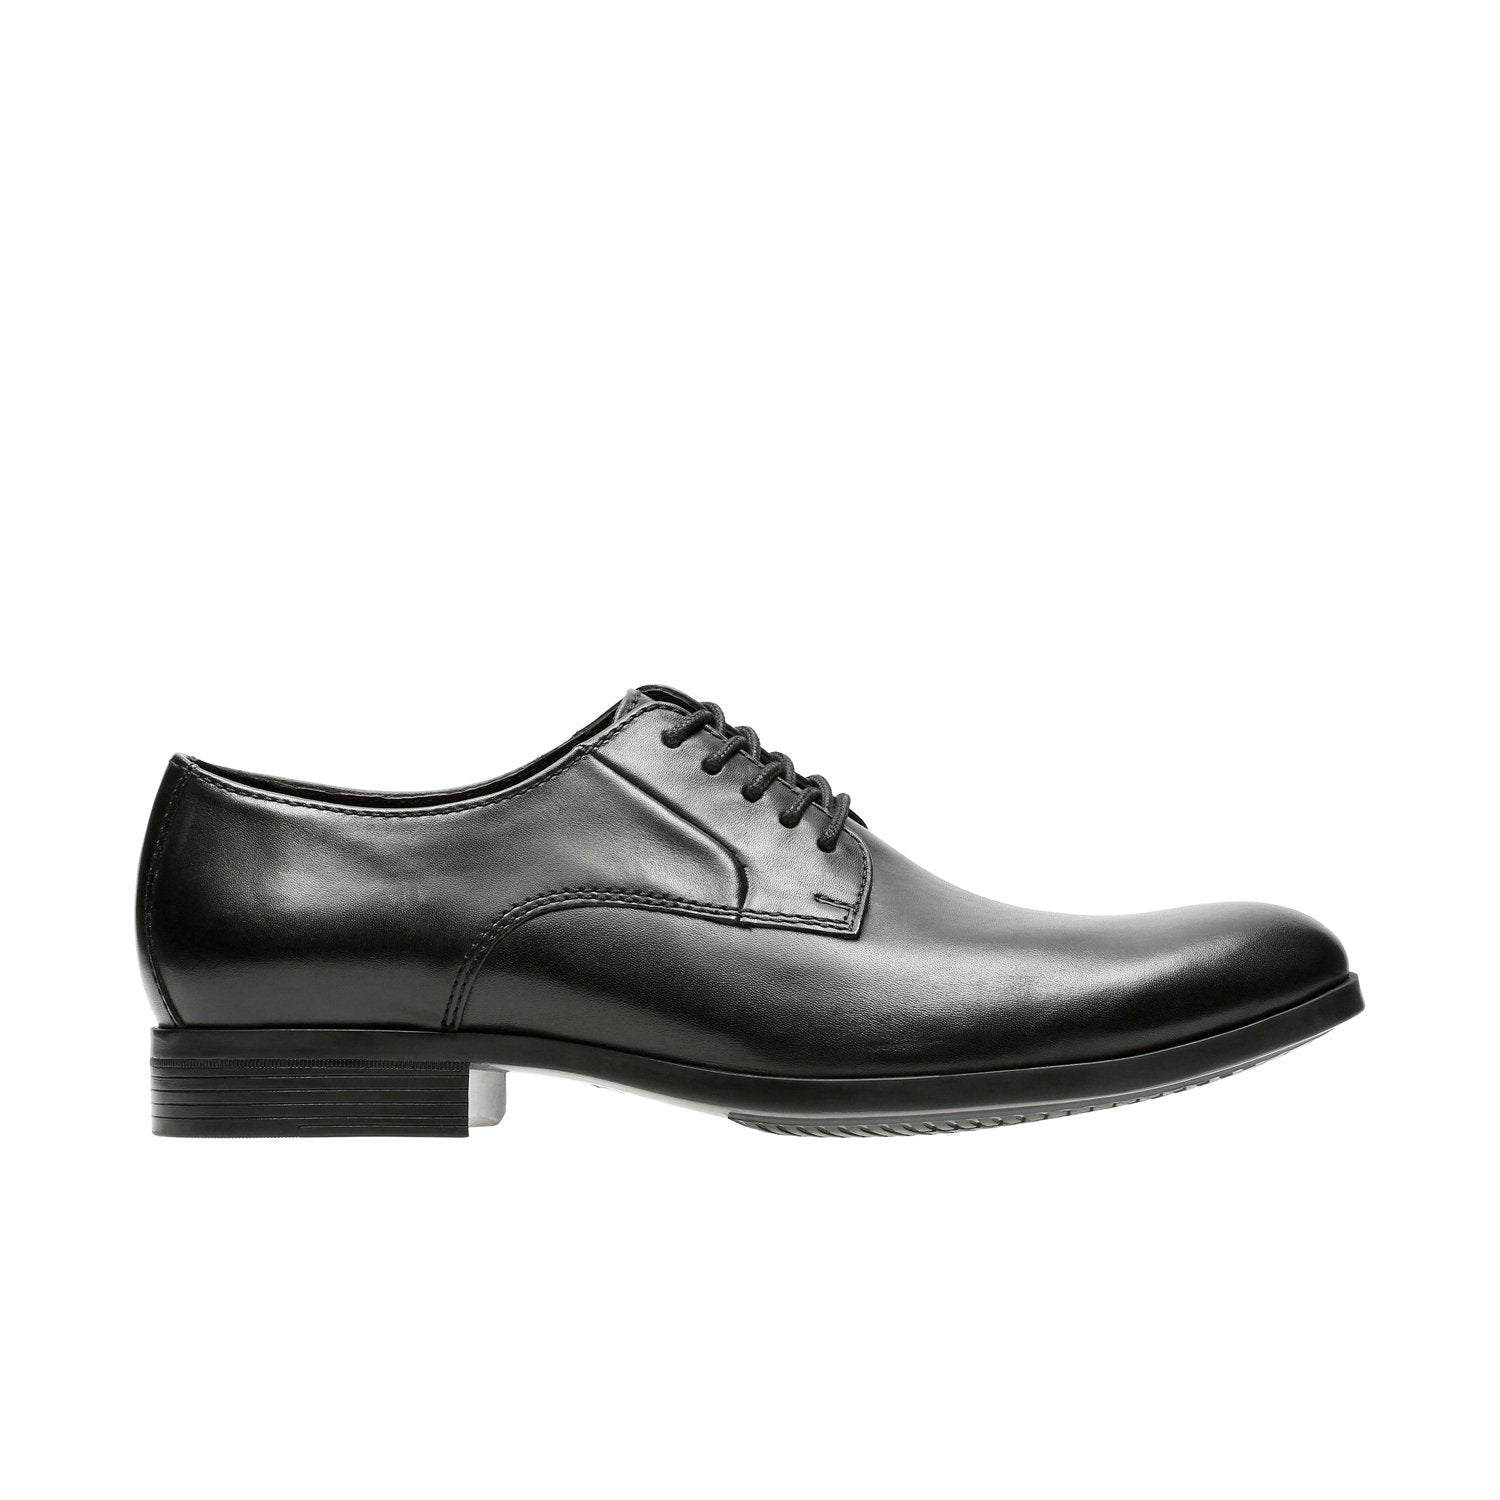 Clarks-Conwell-Plain-Men's-Shoes-Black-Leather-26131554